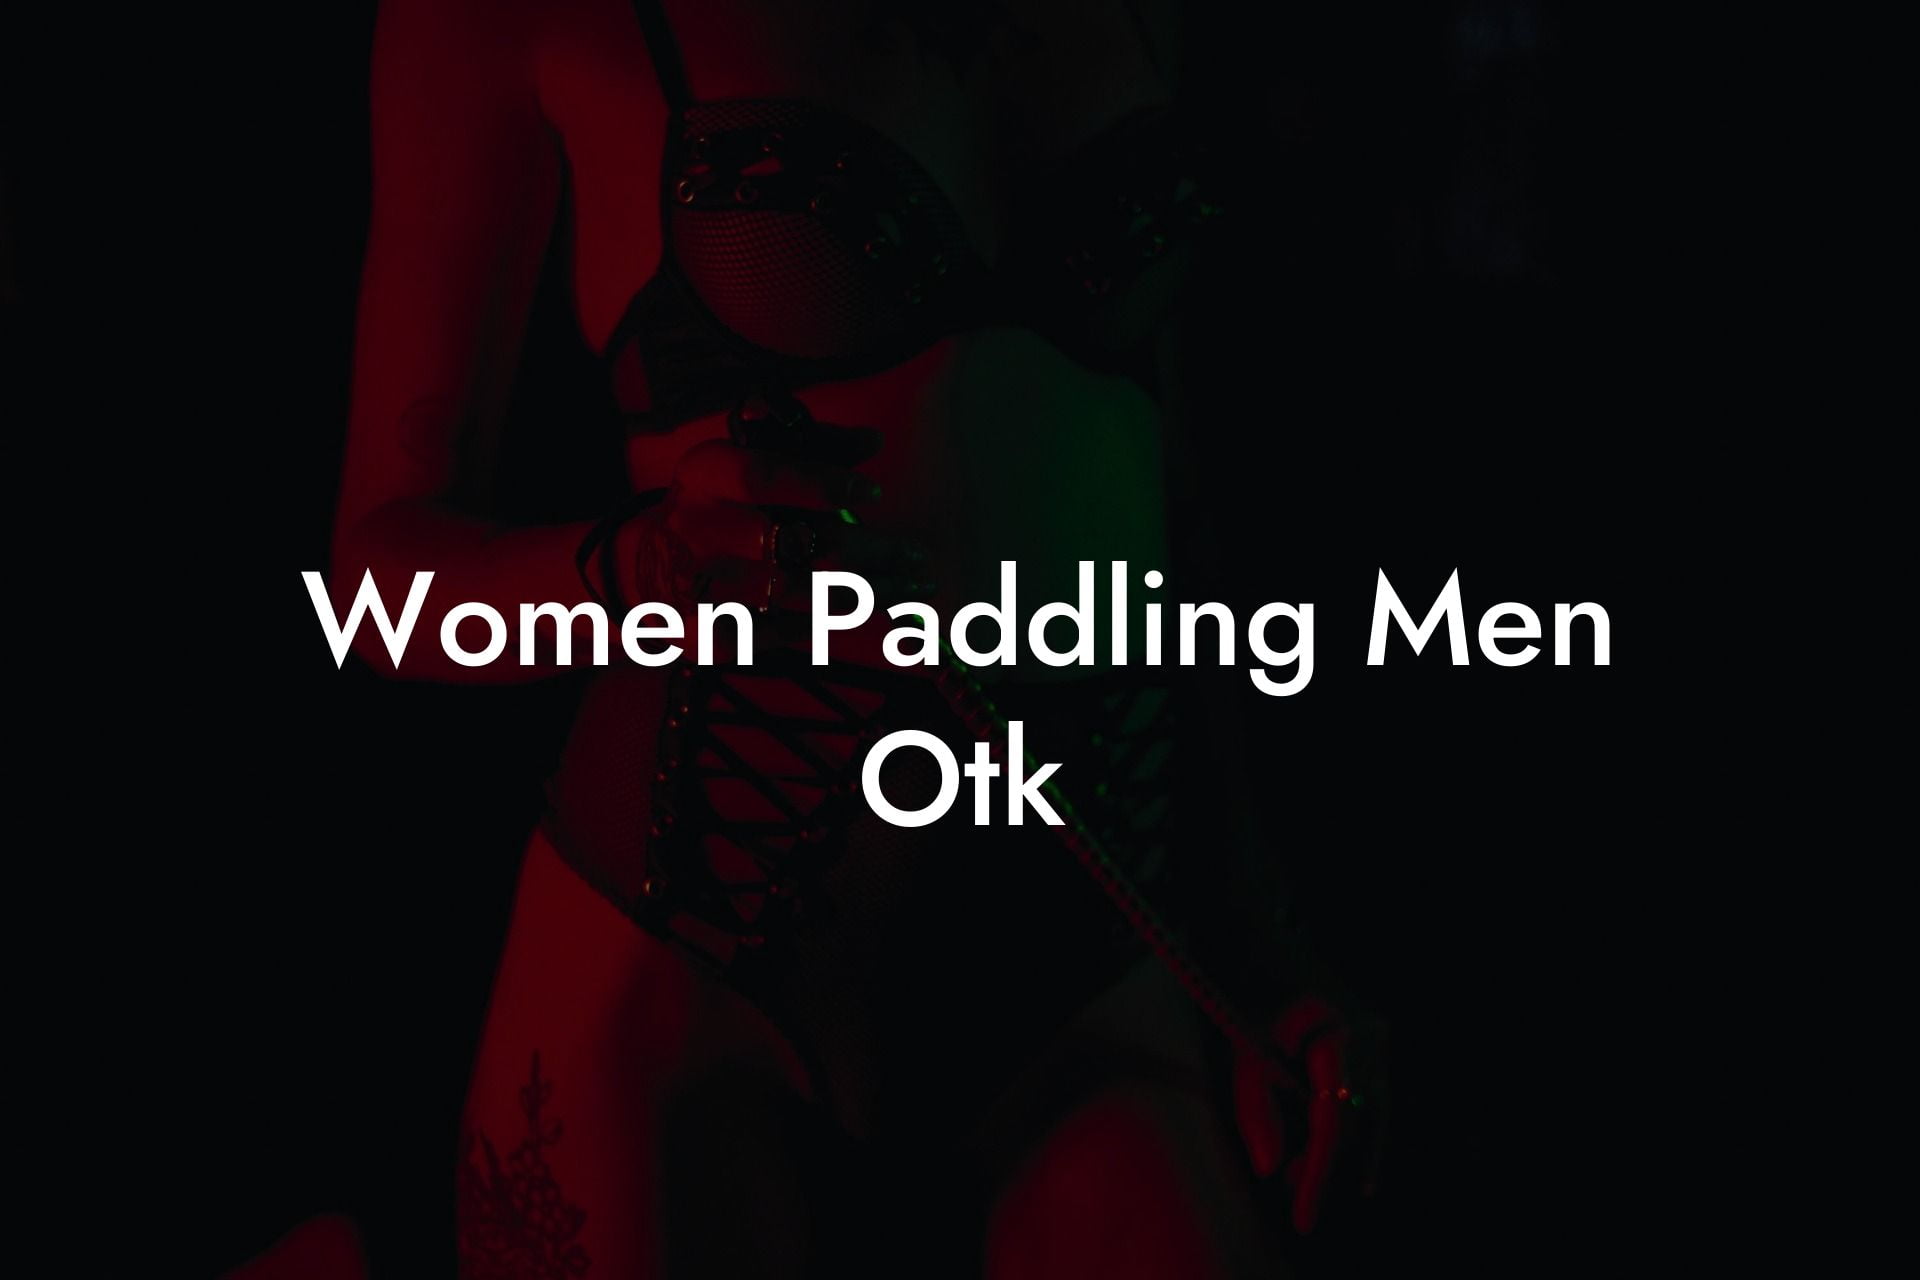 Women Paddling Men Otk